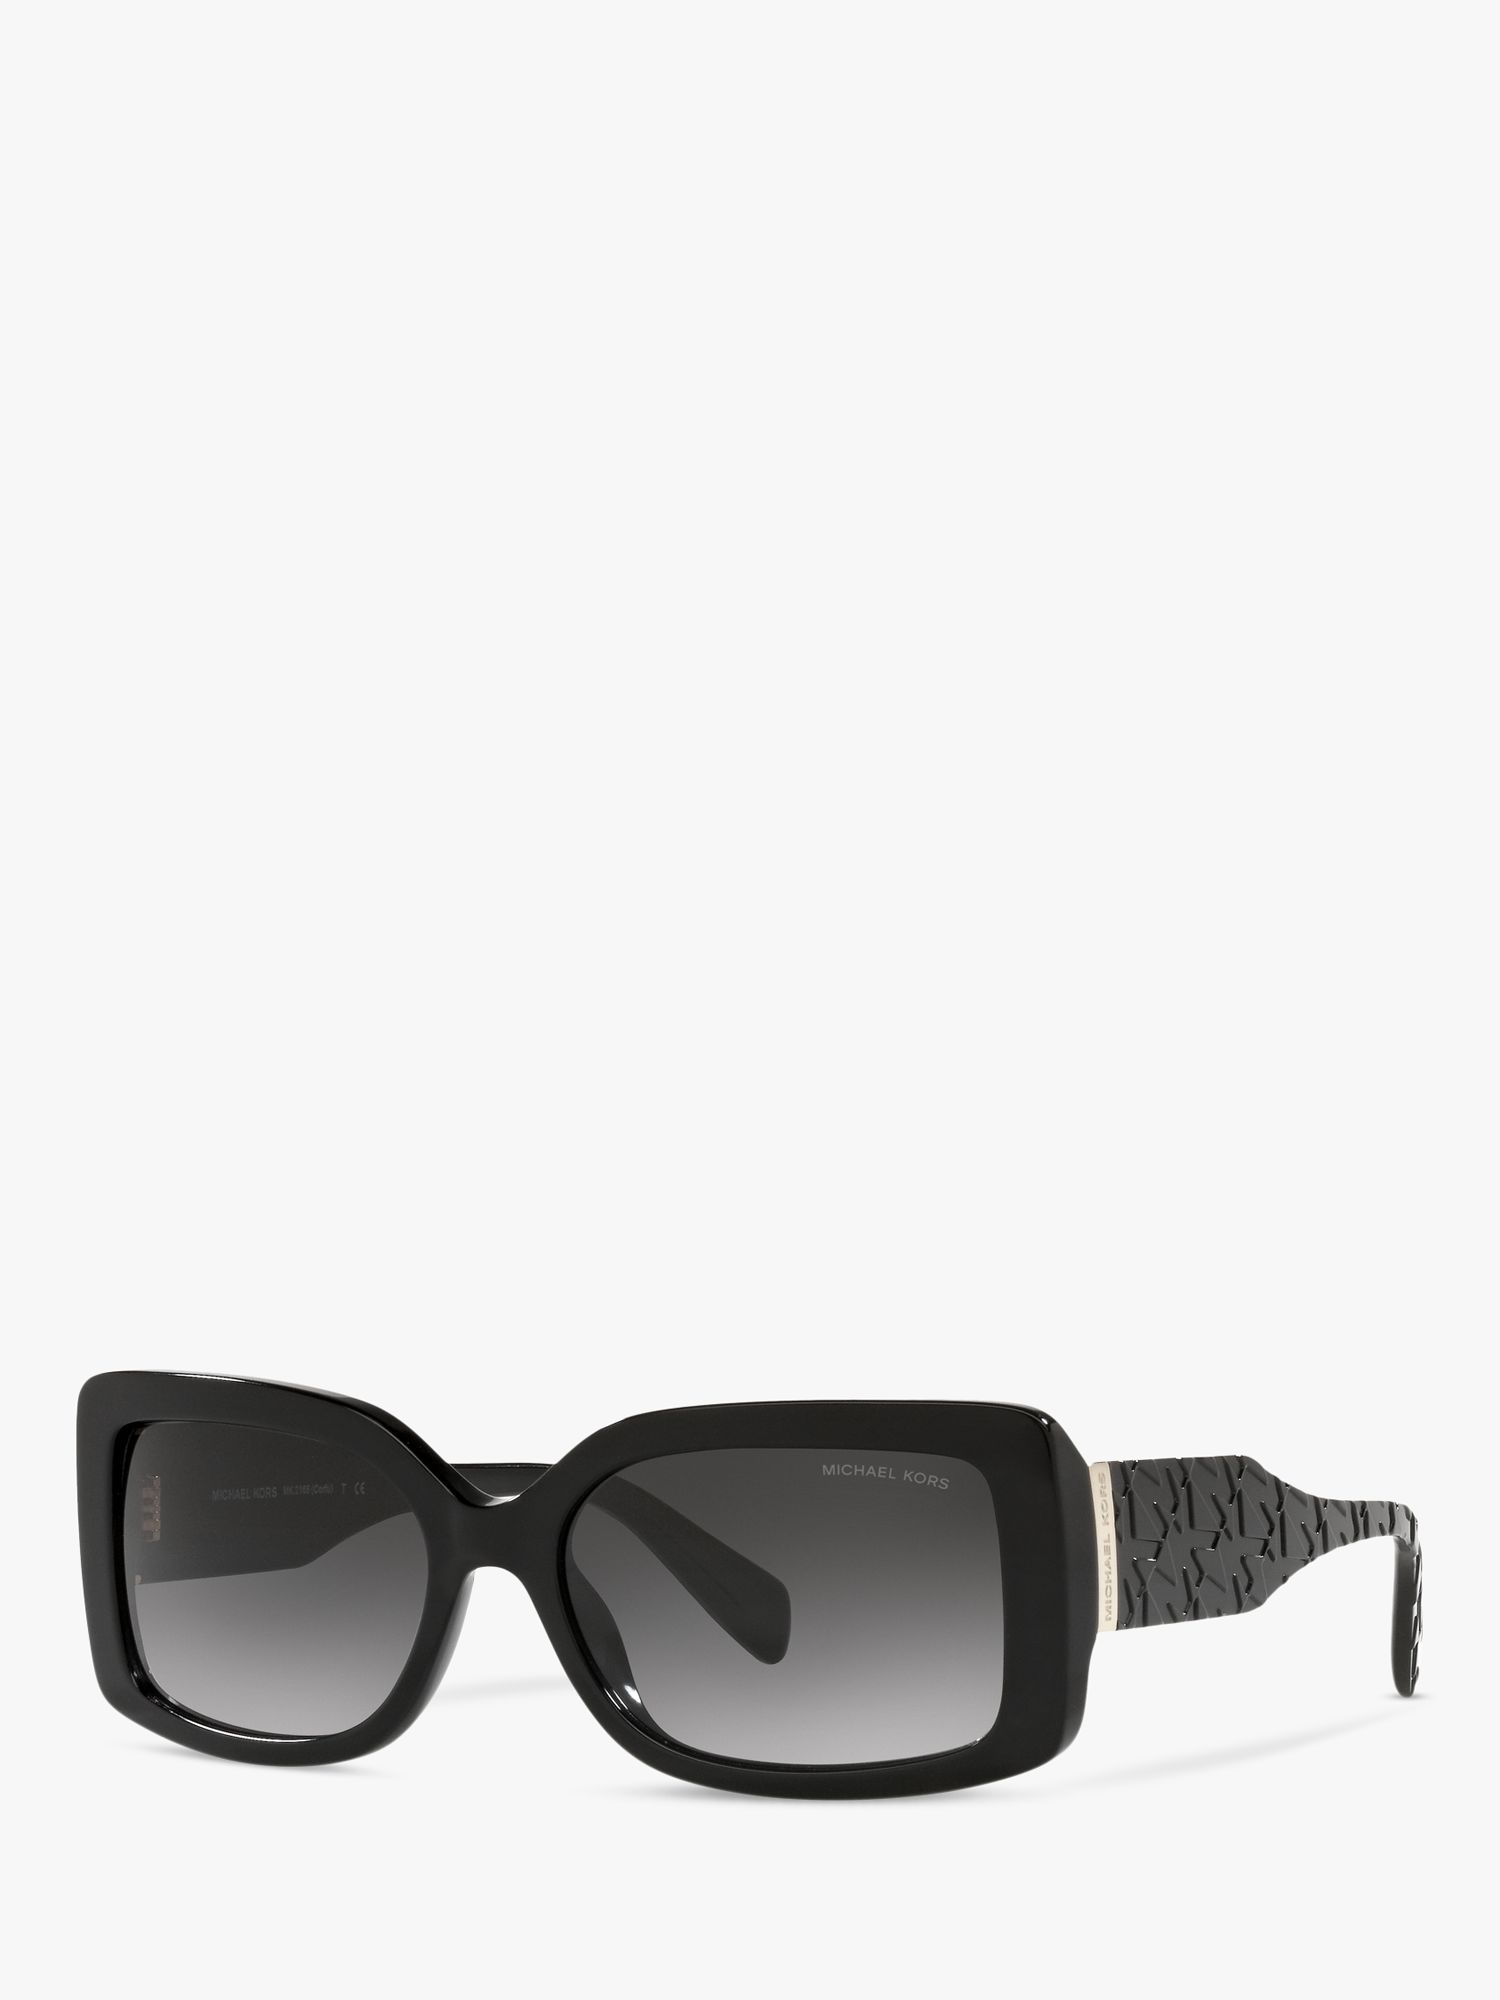 Michael Kors MK2165 Women's Corfu Rectangular Sunglasses, Black/Grey ...